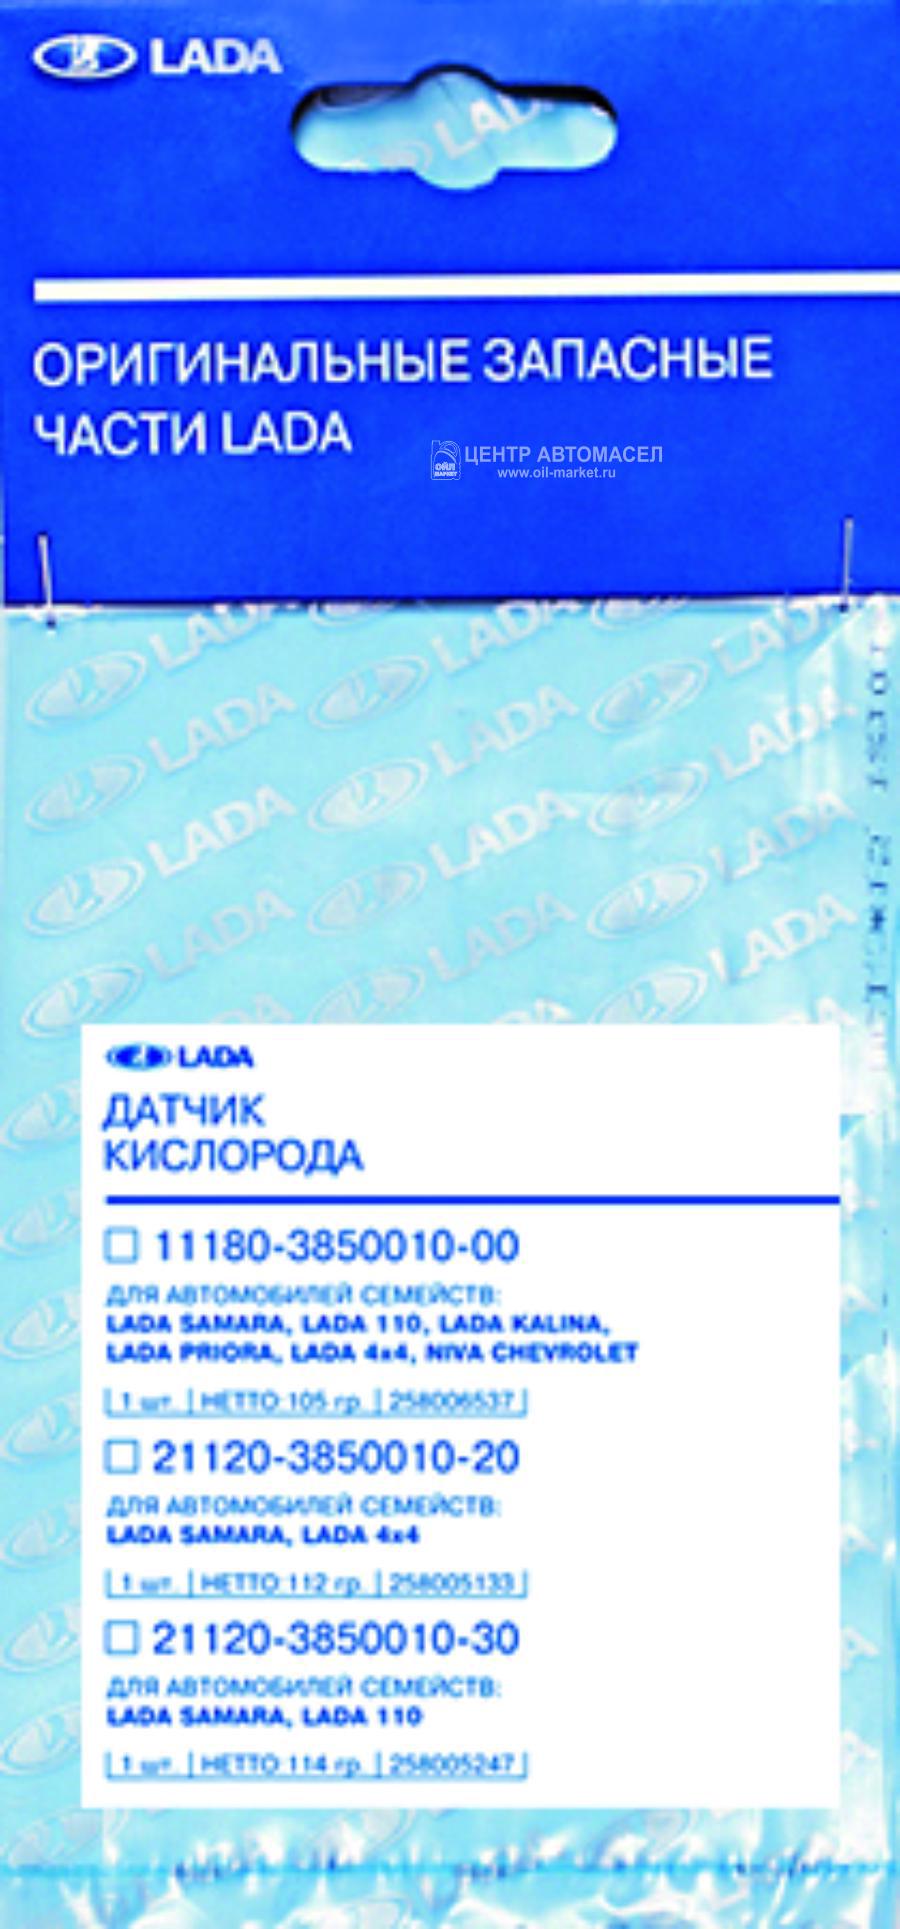 21120385001030 LADA Датчик кисл. для а/м Лада 2110-2112 после кат. (VS-OS 0112)